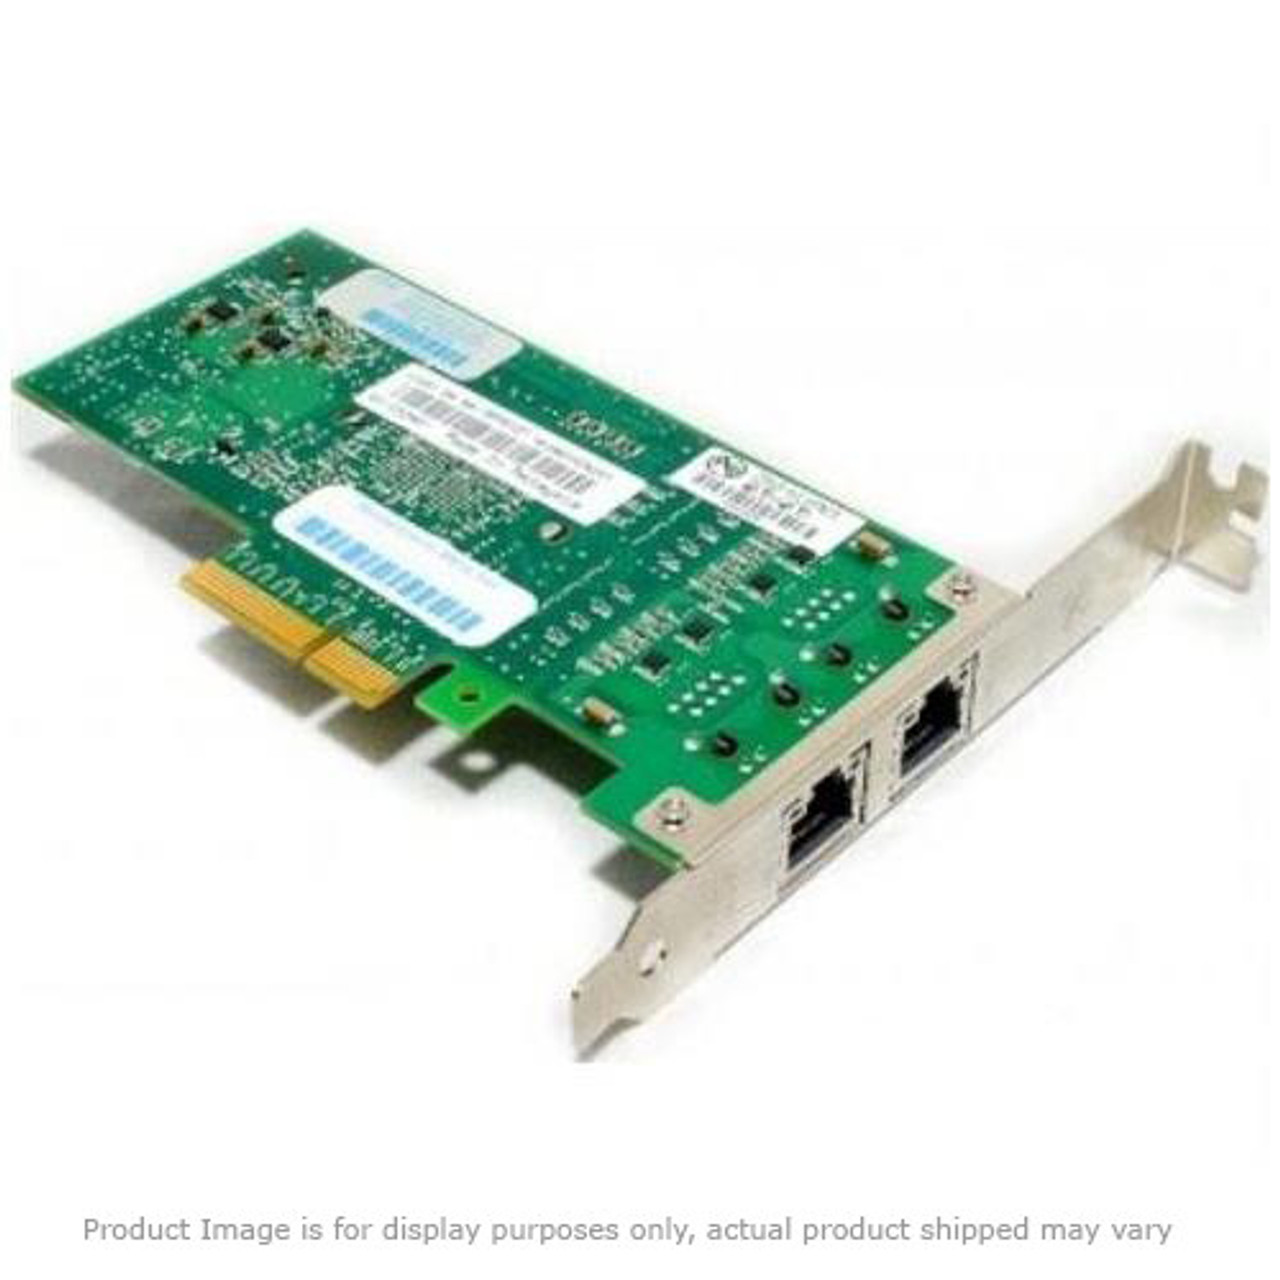 TM1390 Dell Wireless Network Card A/B/G Mini PCI BCOM